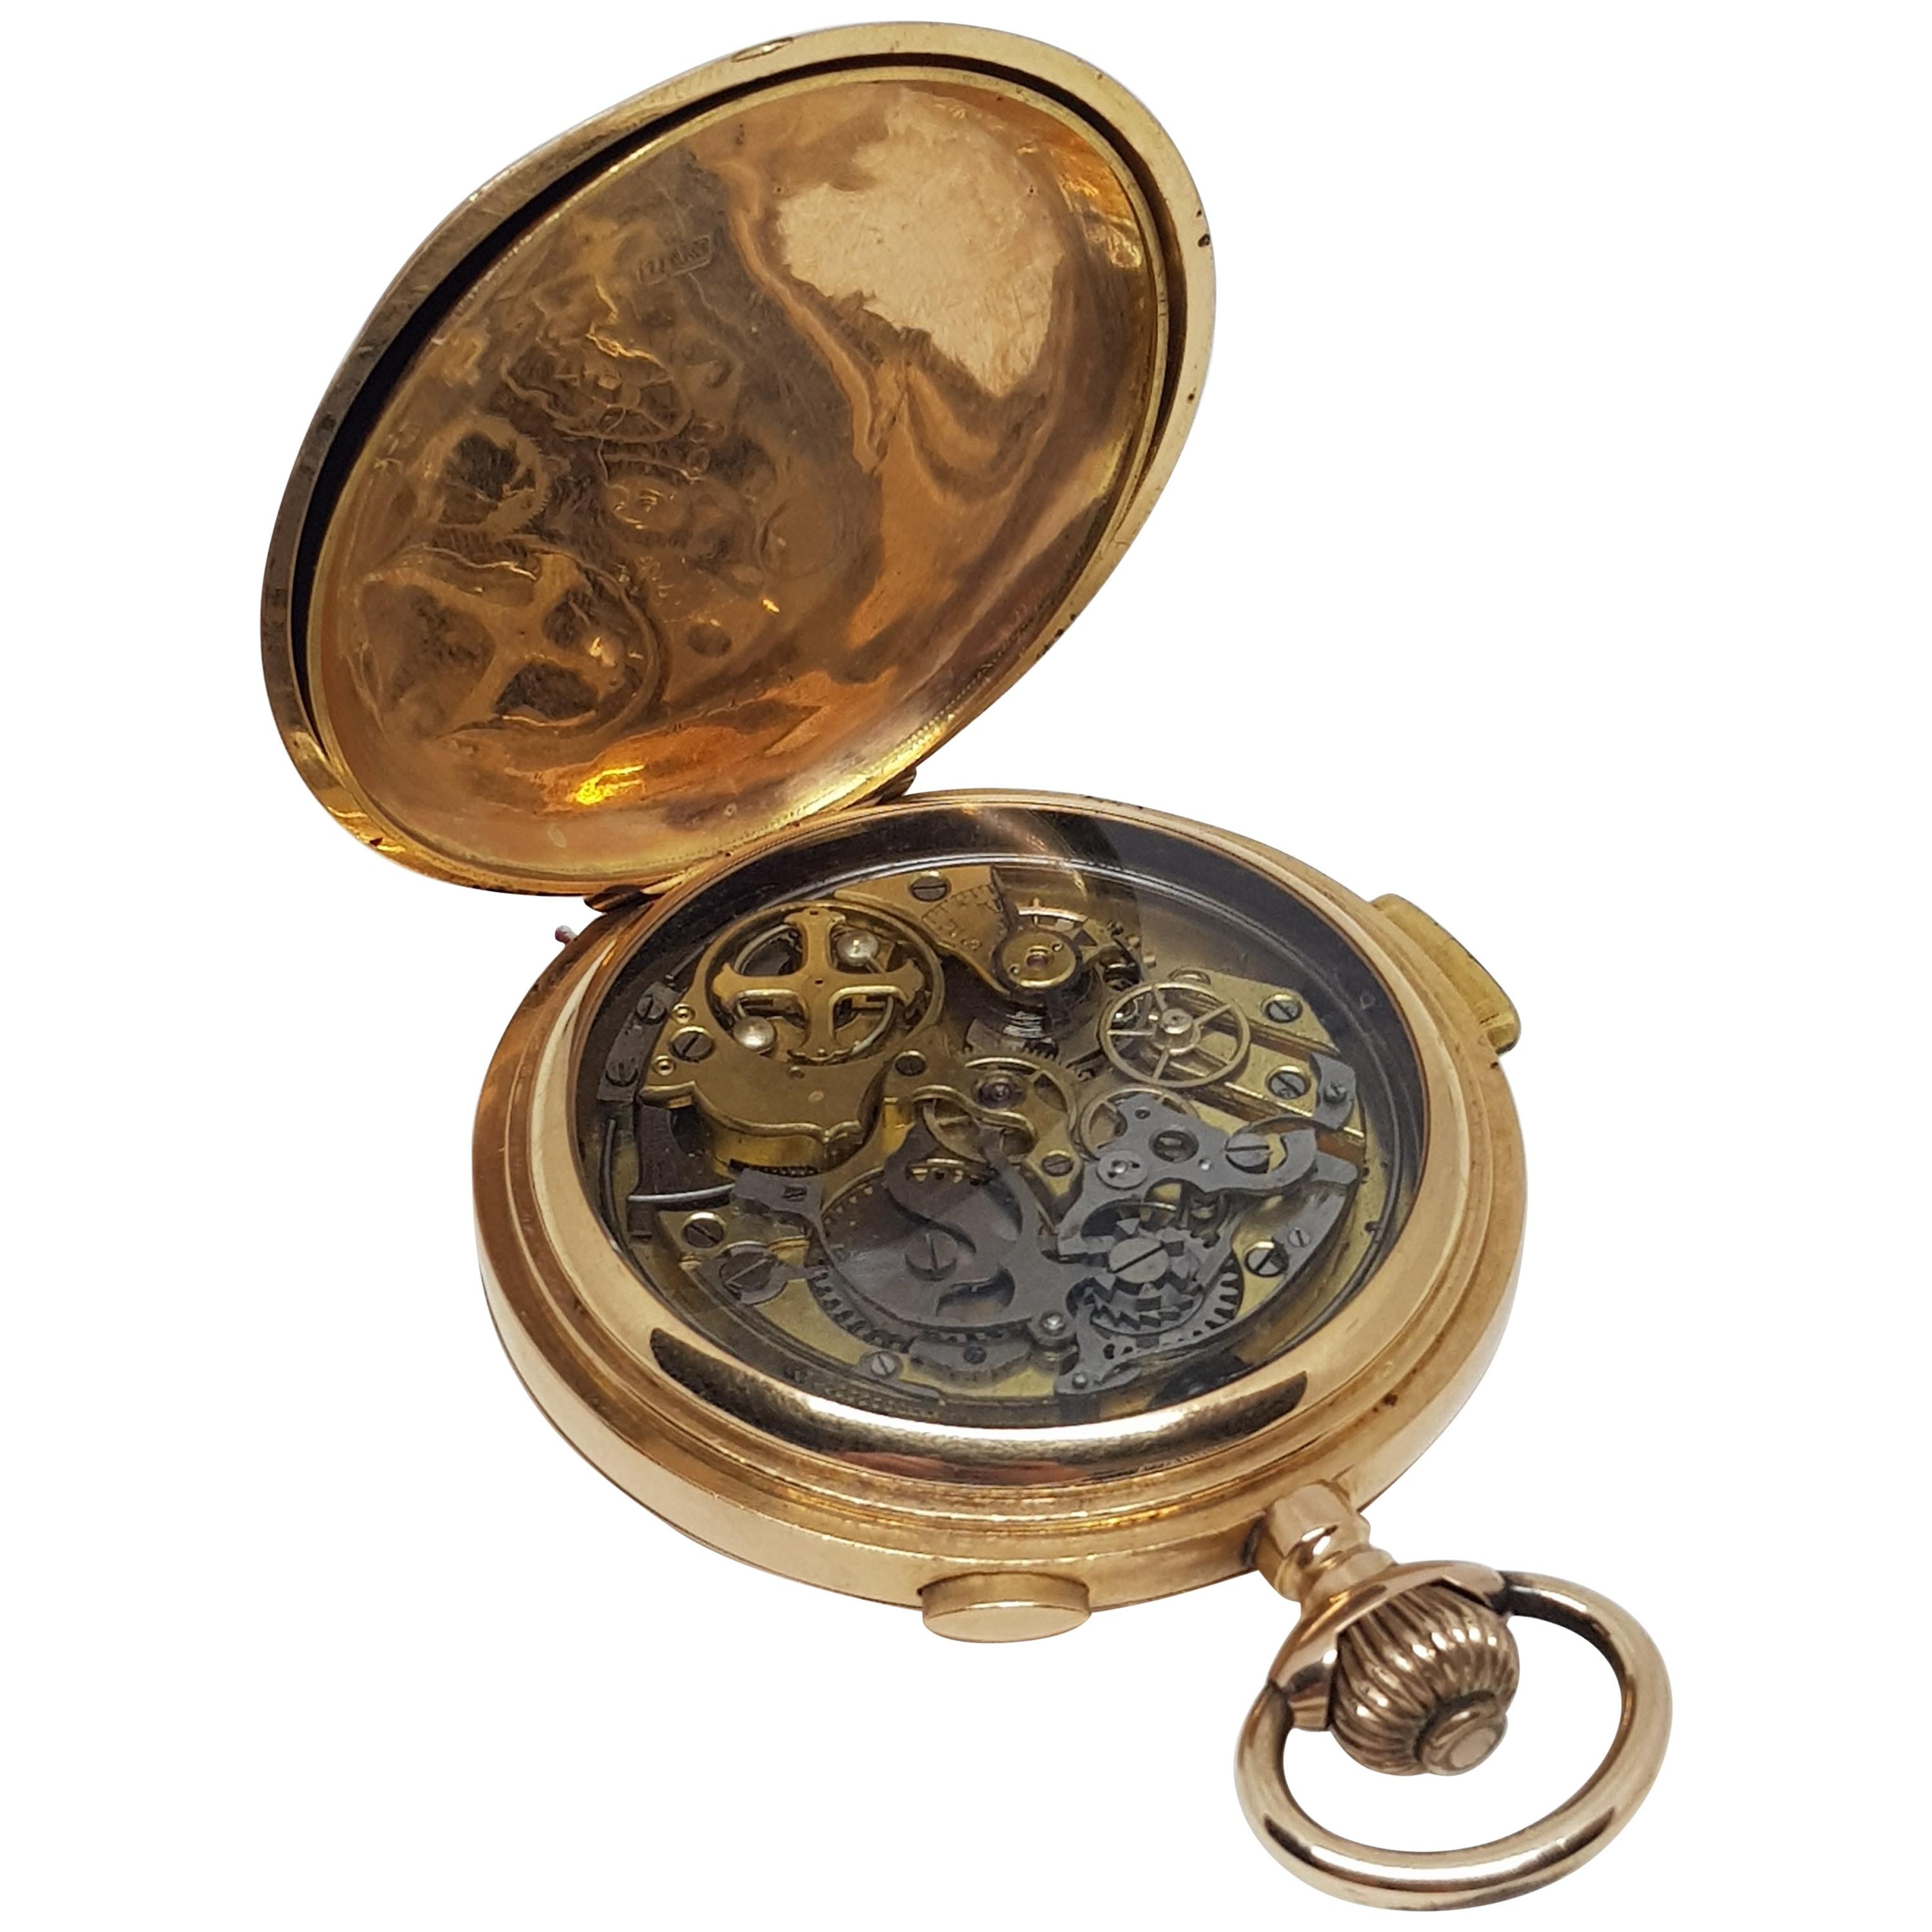 Chronographe Repetition a Quartz Silencieus Rocail Musical Gold Pocket Watch